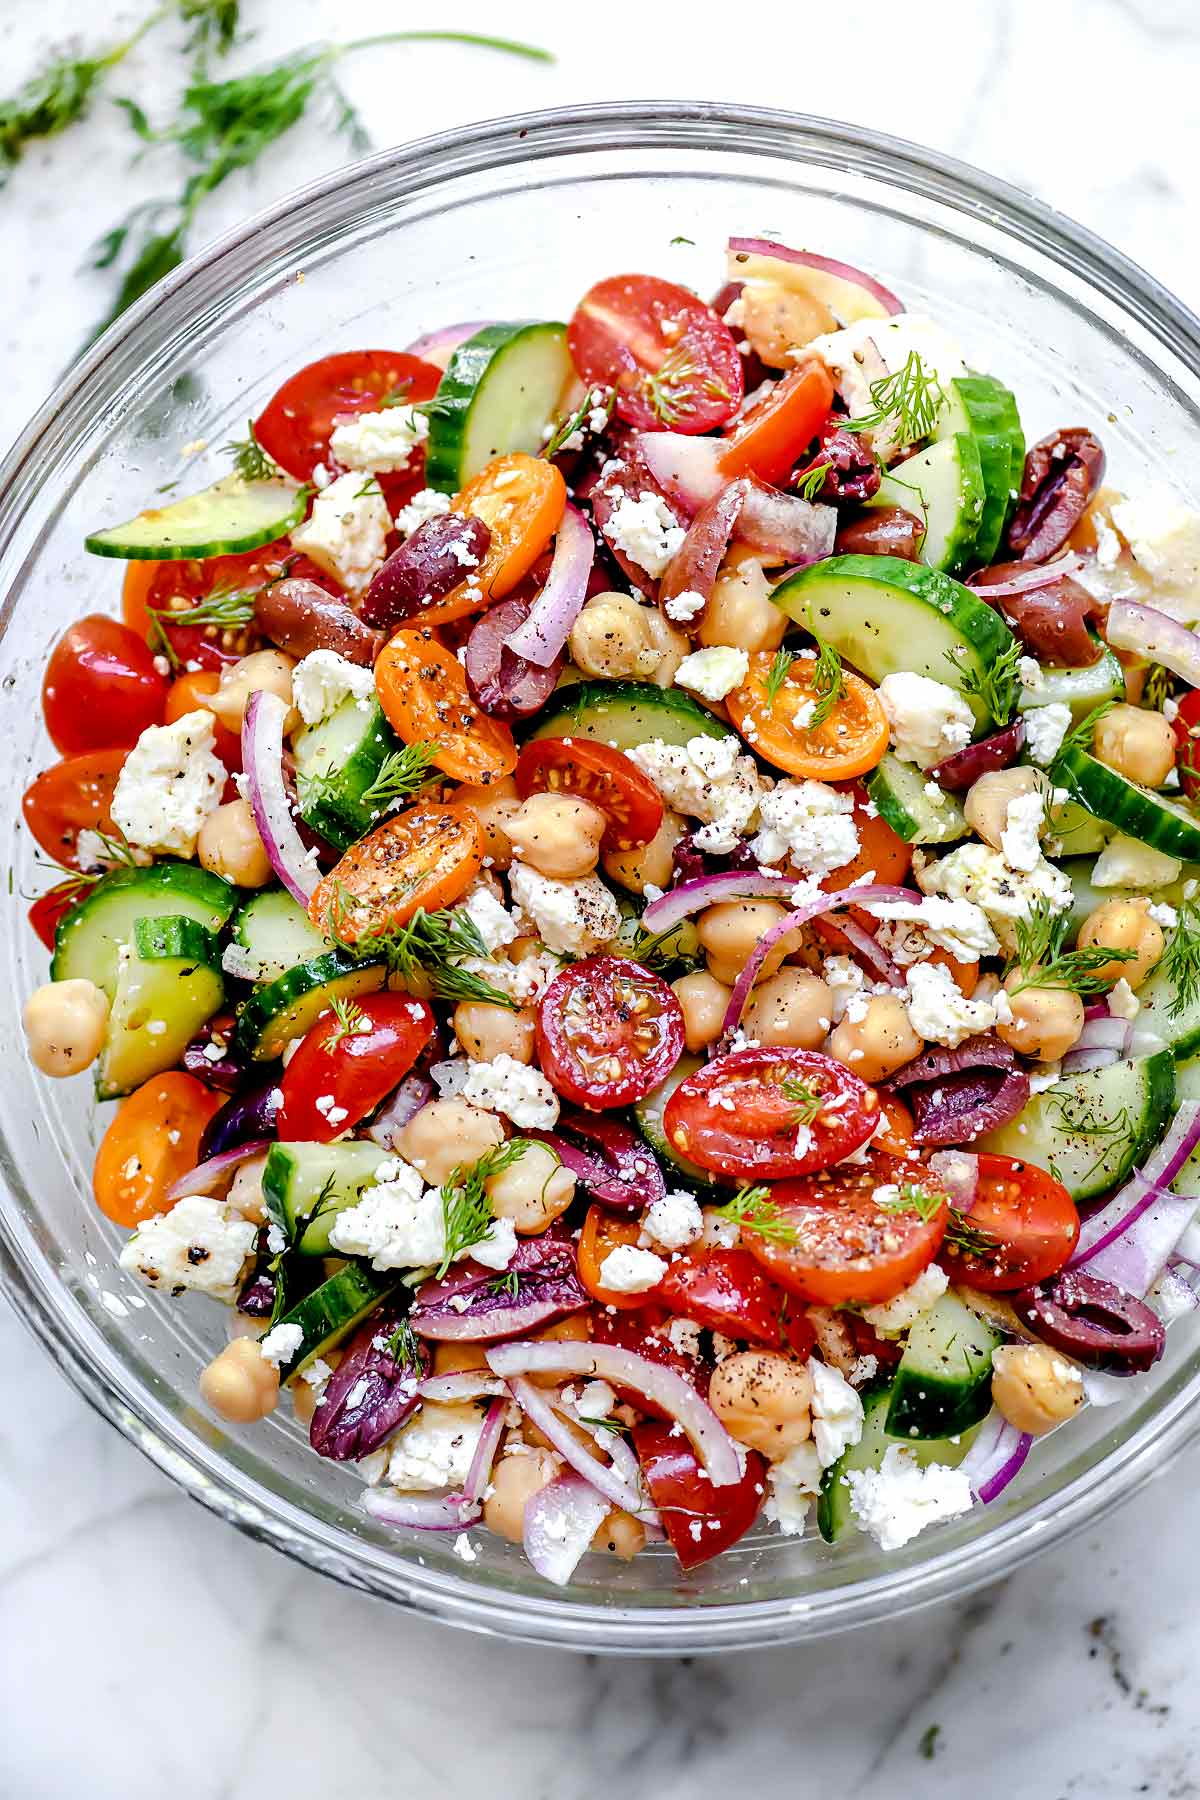 https://www.foodiecrush.com/wp-content/uploads/2020/05/Greek-Chickpea-Salad-foodiecrush.com-008.jpg